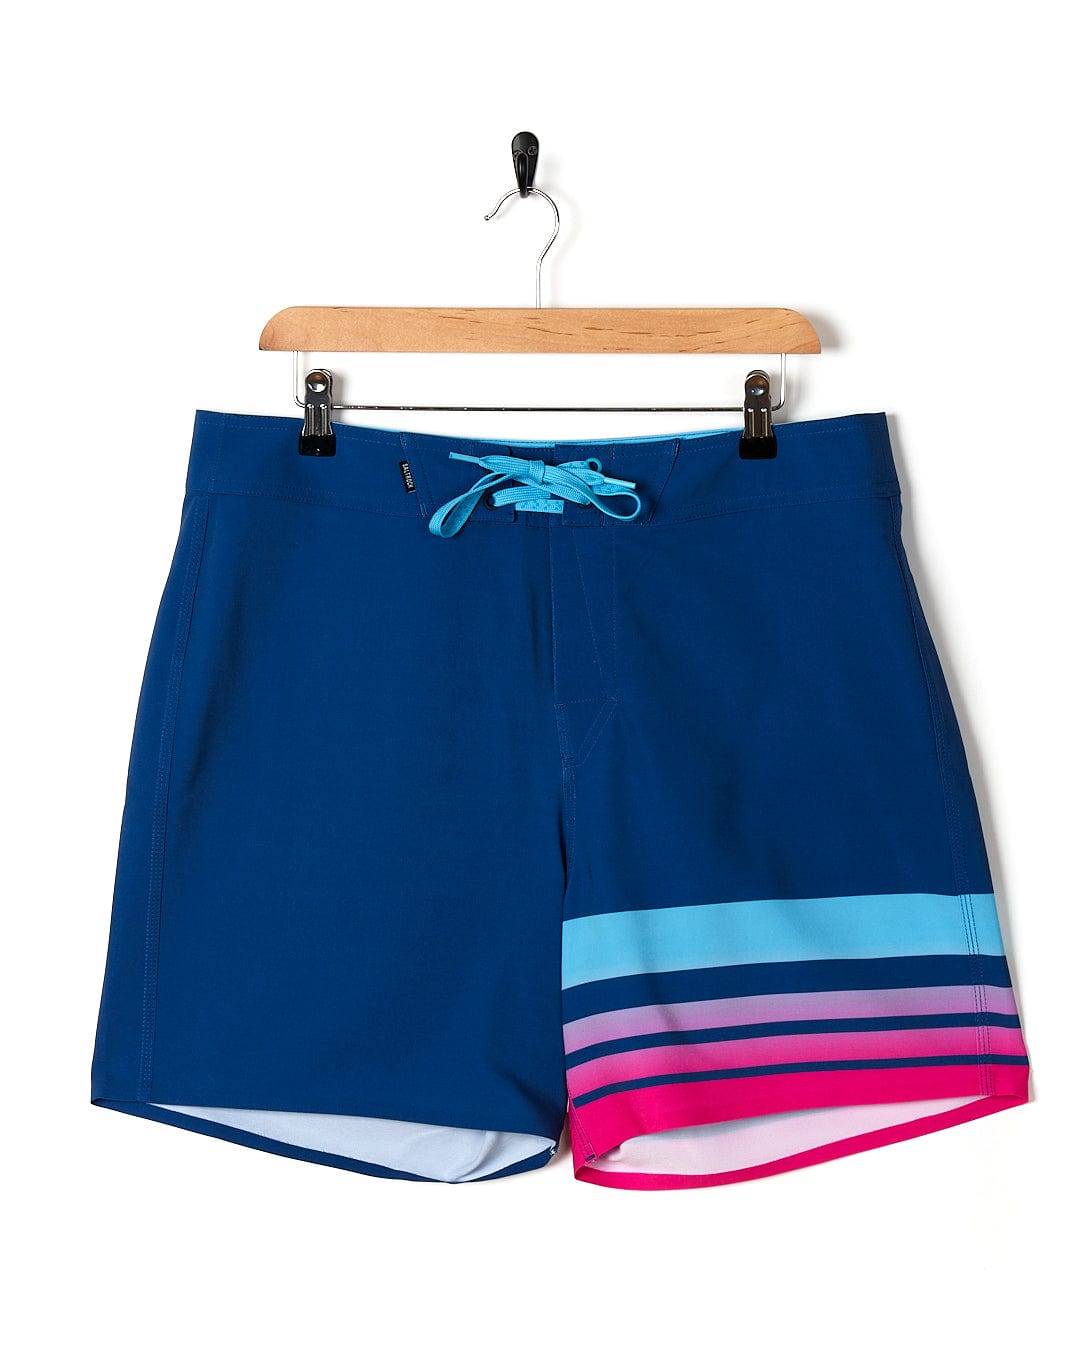 A Splash Gradient - Mens Boardshort - Dark Blue by Saltrock with pink and blue stripes.